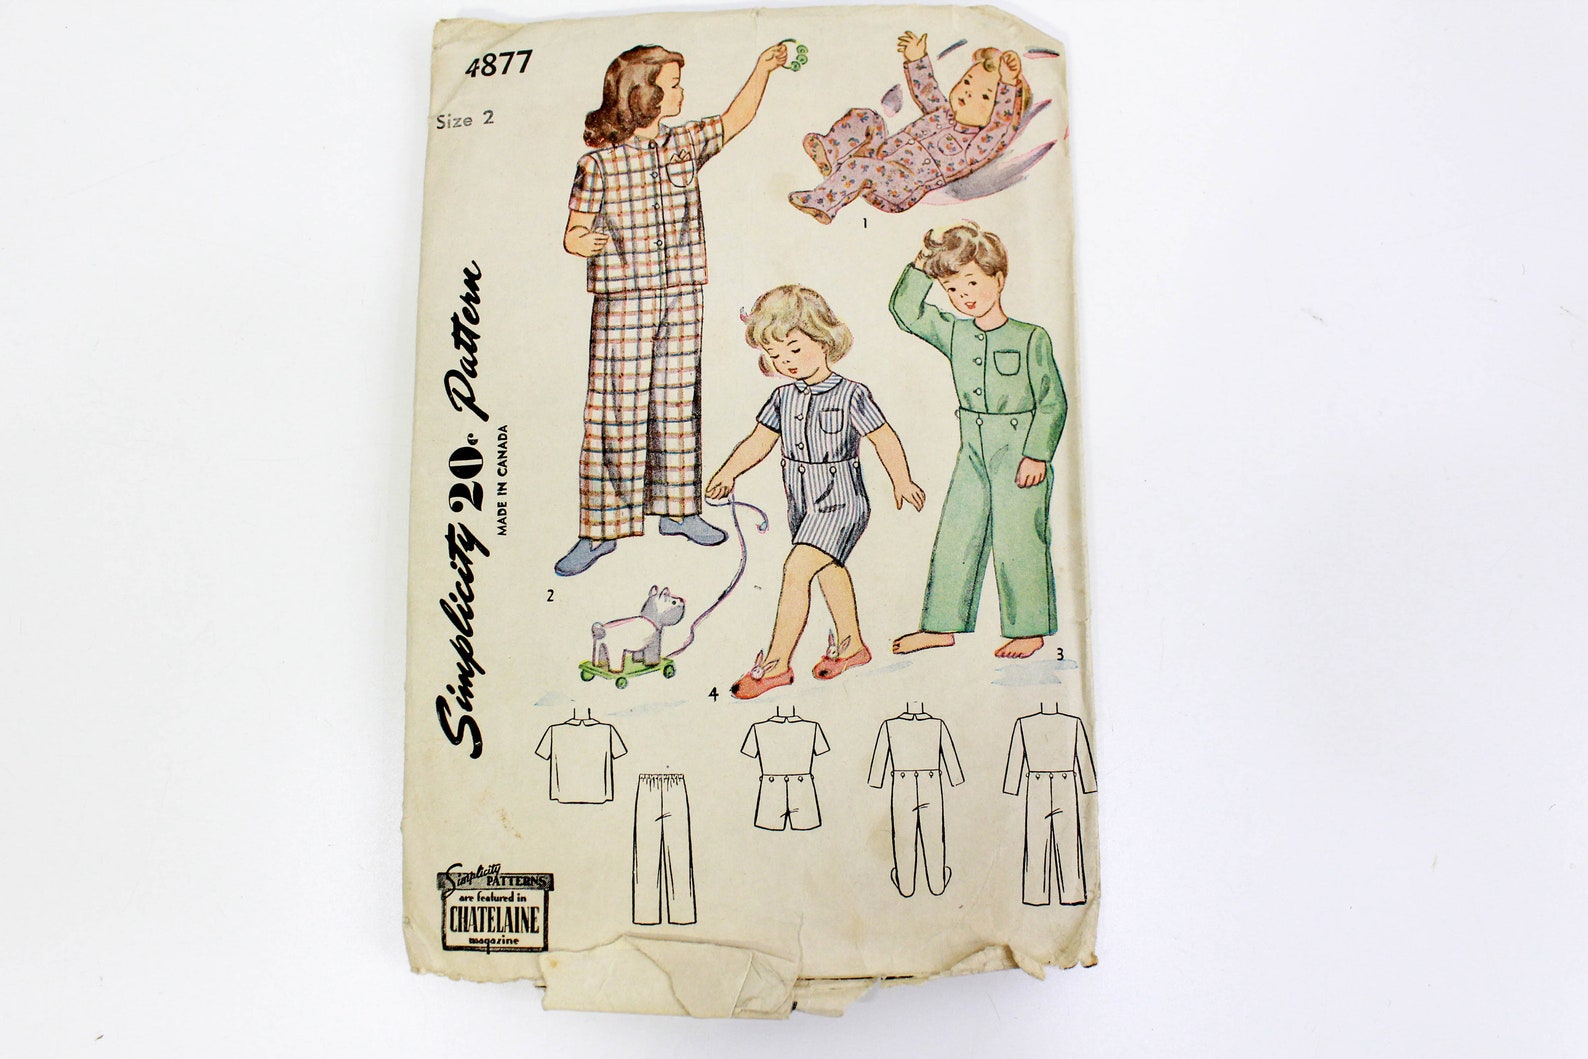 Vintage 1940s Child's Pyjamas Sewing Pattern, Simplicity 4877, Complete